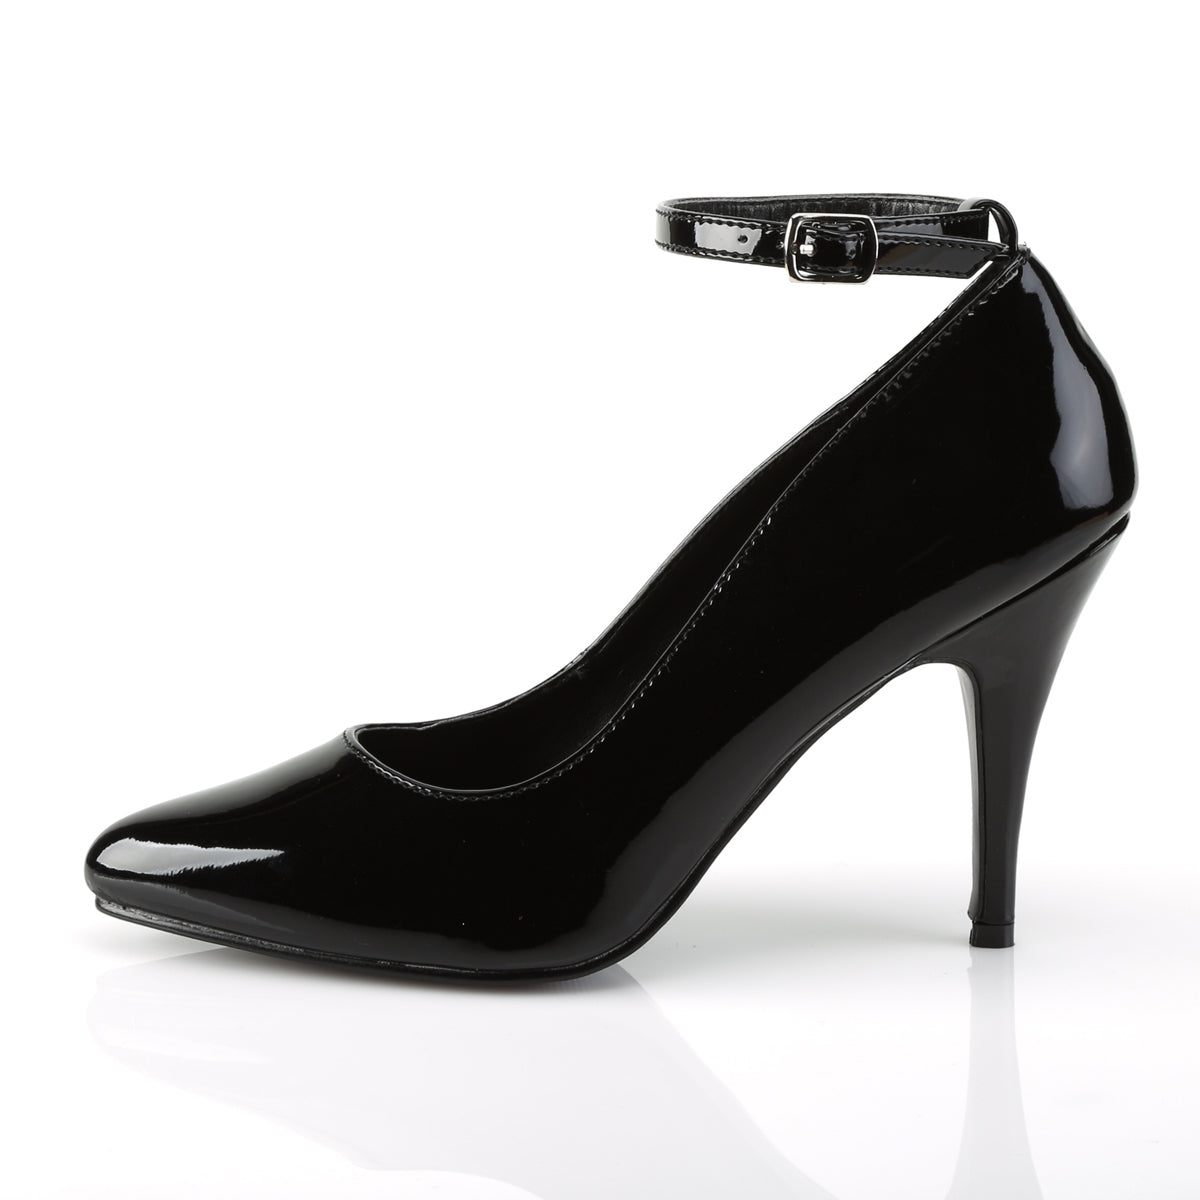 VANITY-431 Pleaser Shoe 4" Heel Black Patent Fetish Footwear-Pleaser- Sexy Shoes Pole Dance Heels